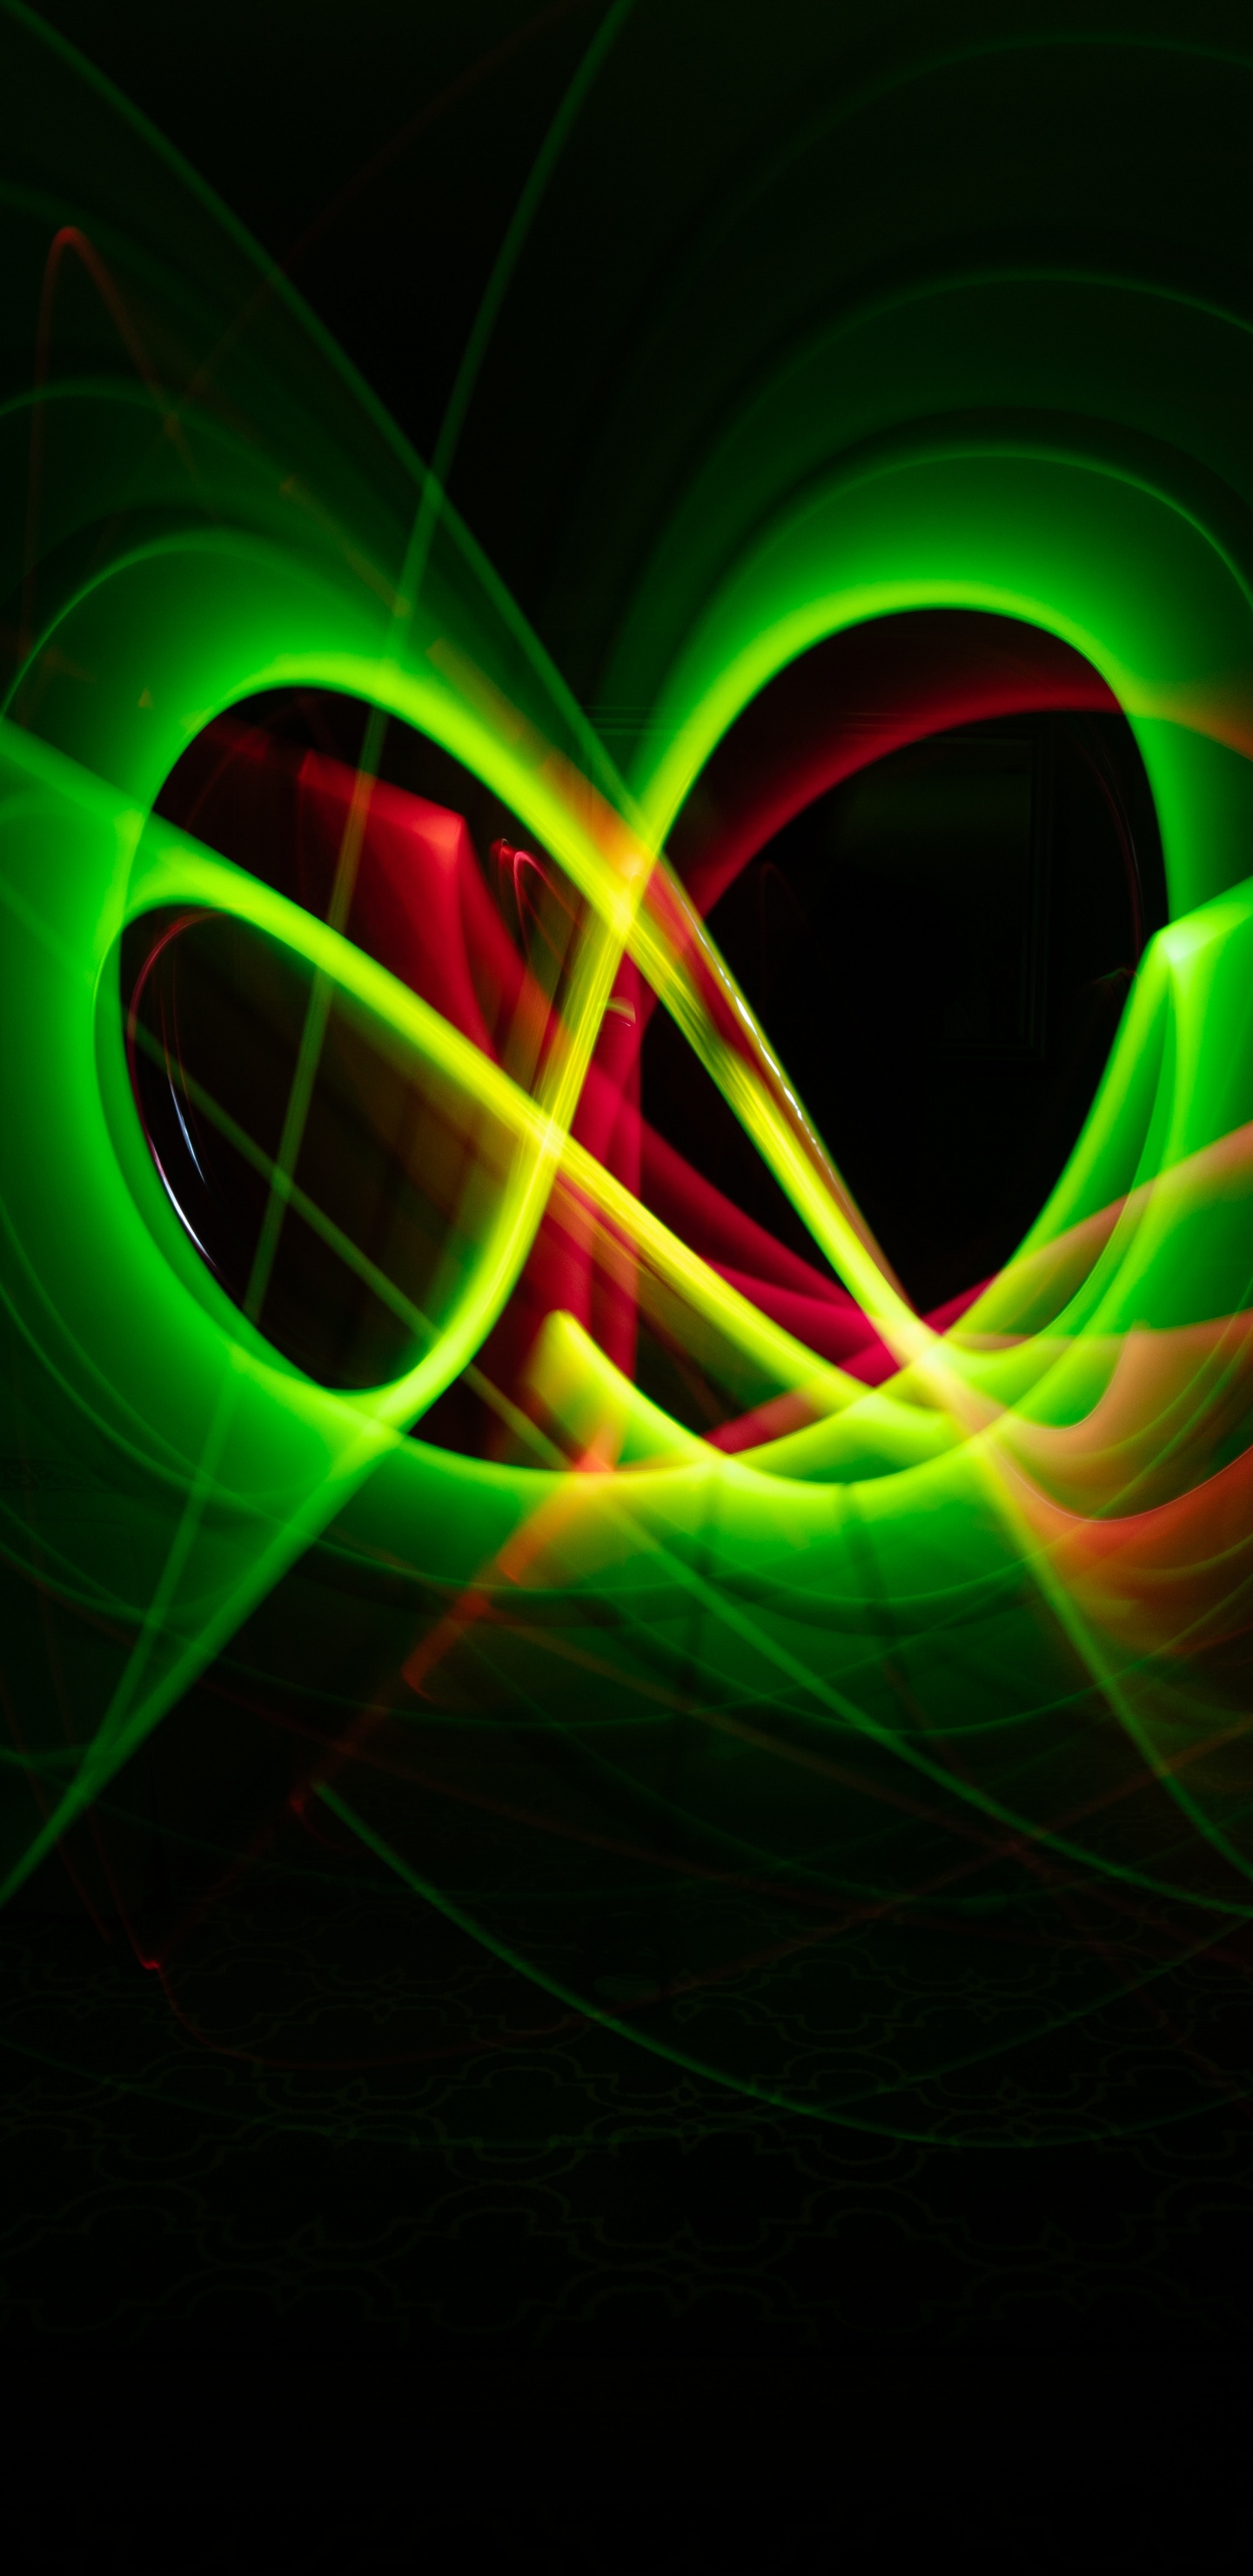 Papel Tapiz Digital de Luz Verde y Roja. Wallpaper in 1440x2960 Resolution